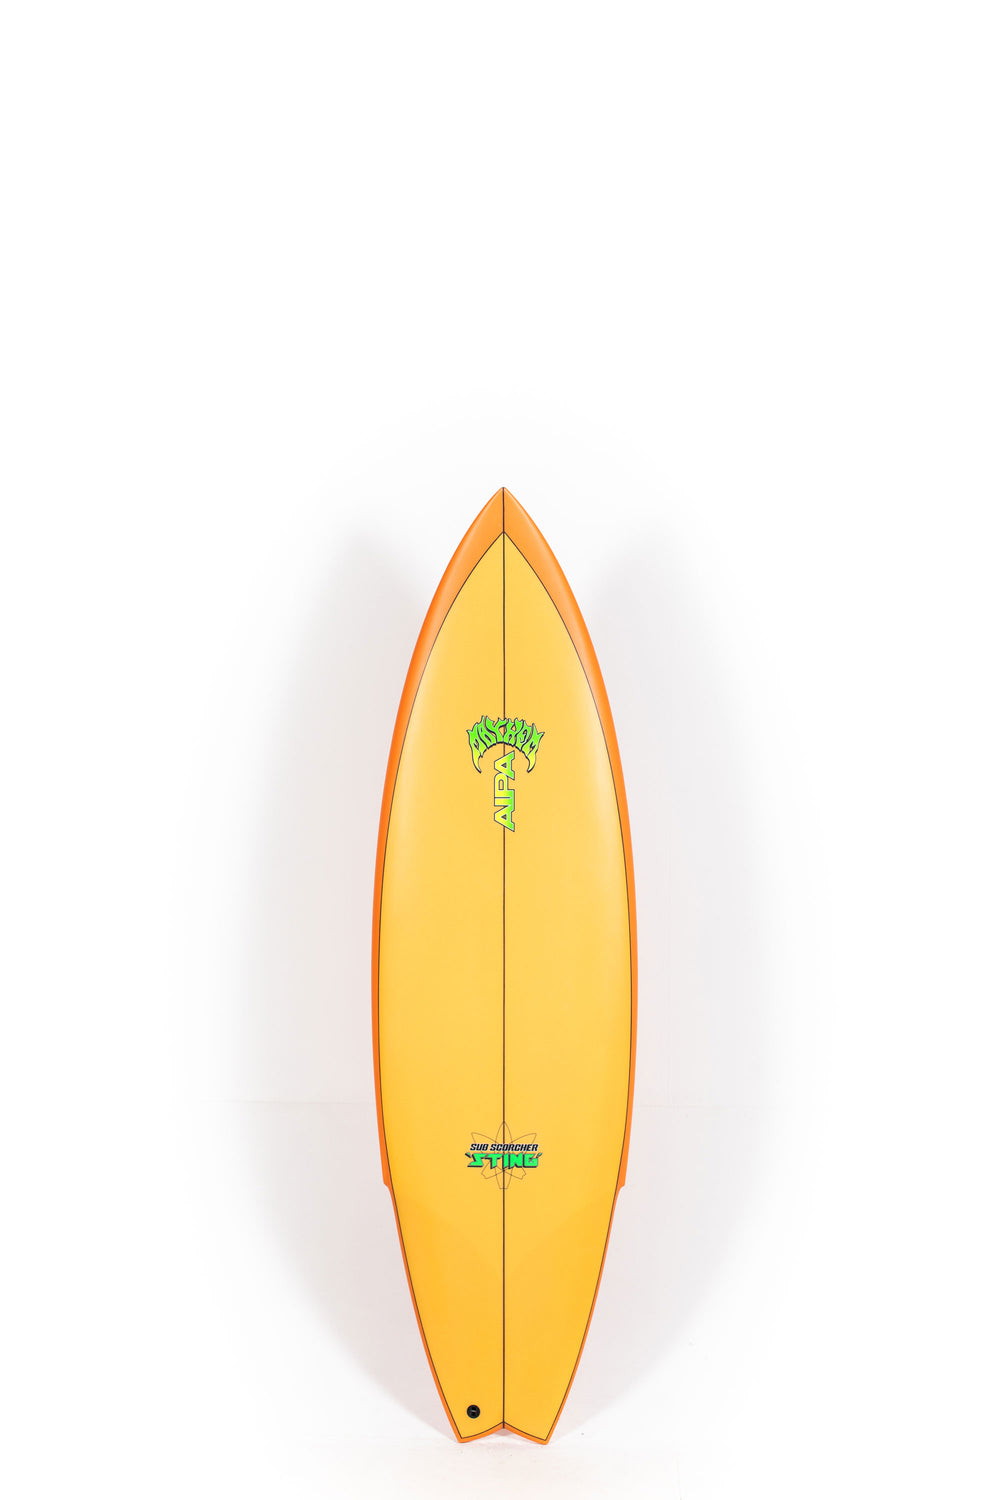 Lost Surfboard - SUB SCORCHER STING by Mayhem x Aipa - 6'1” x 20 